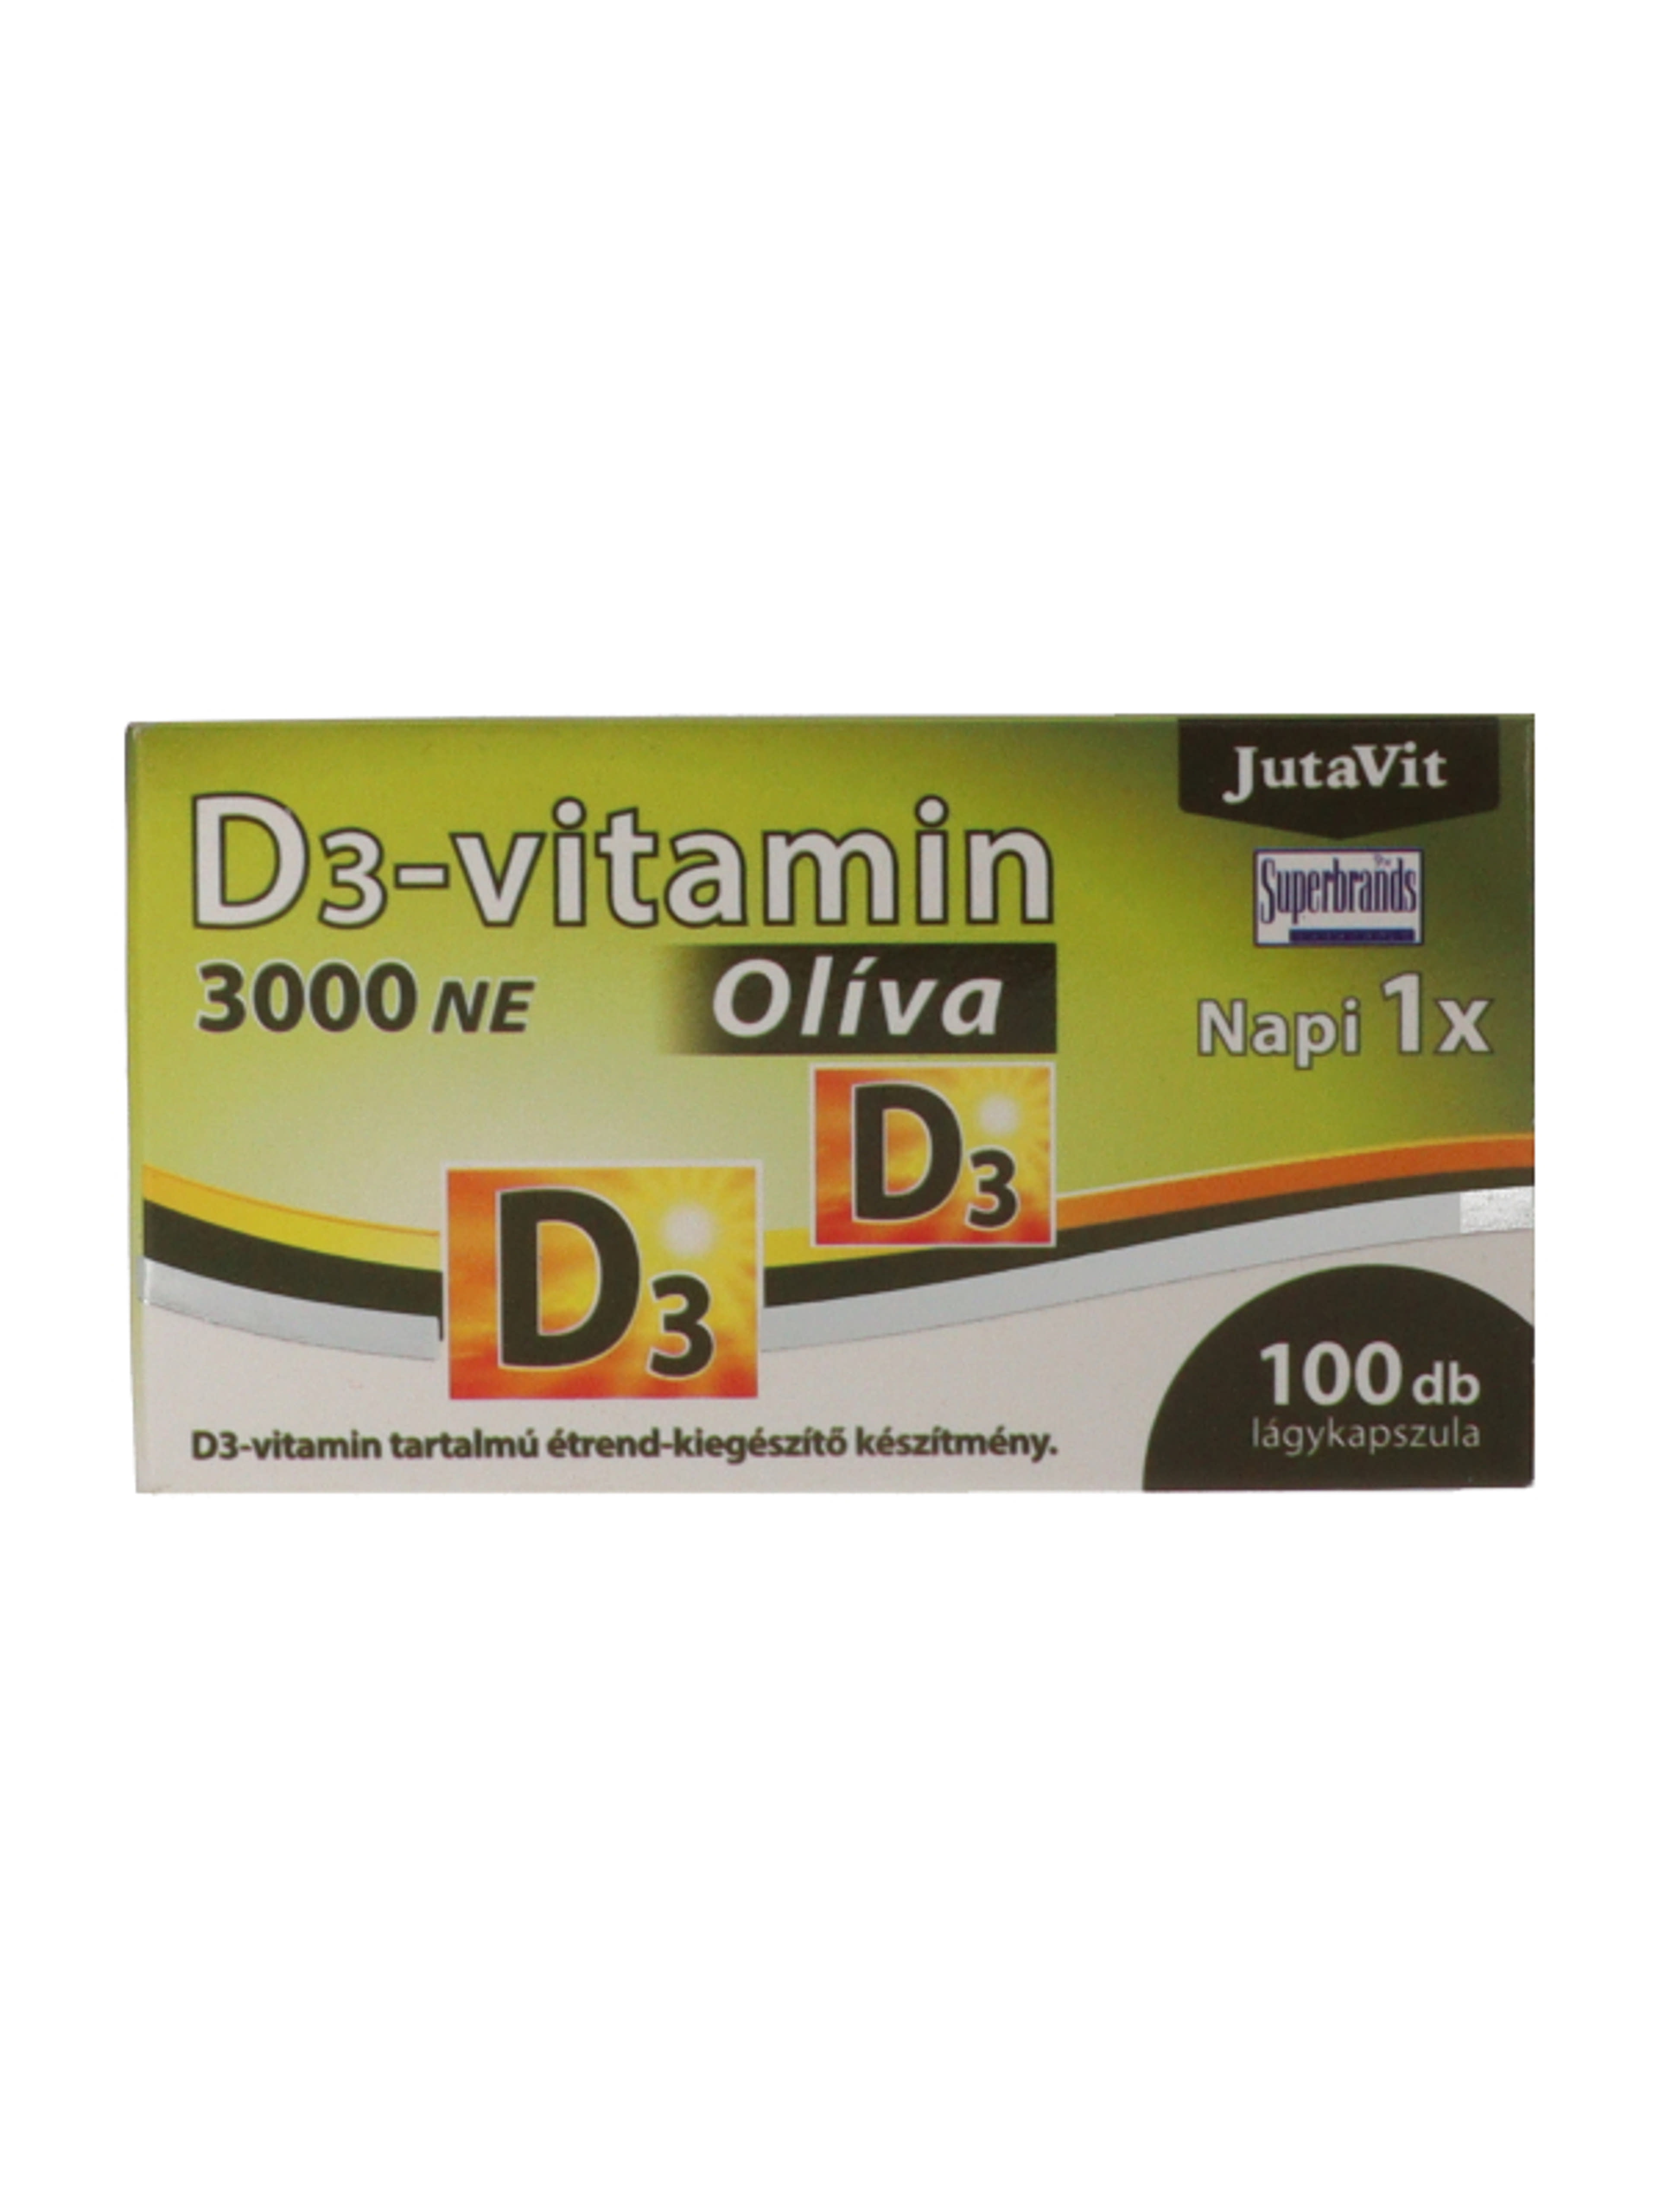 Jutavit D3-vitamin 3000 Ne lágykapszula - 100 db-2